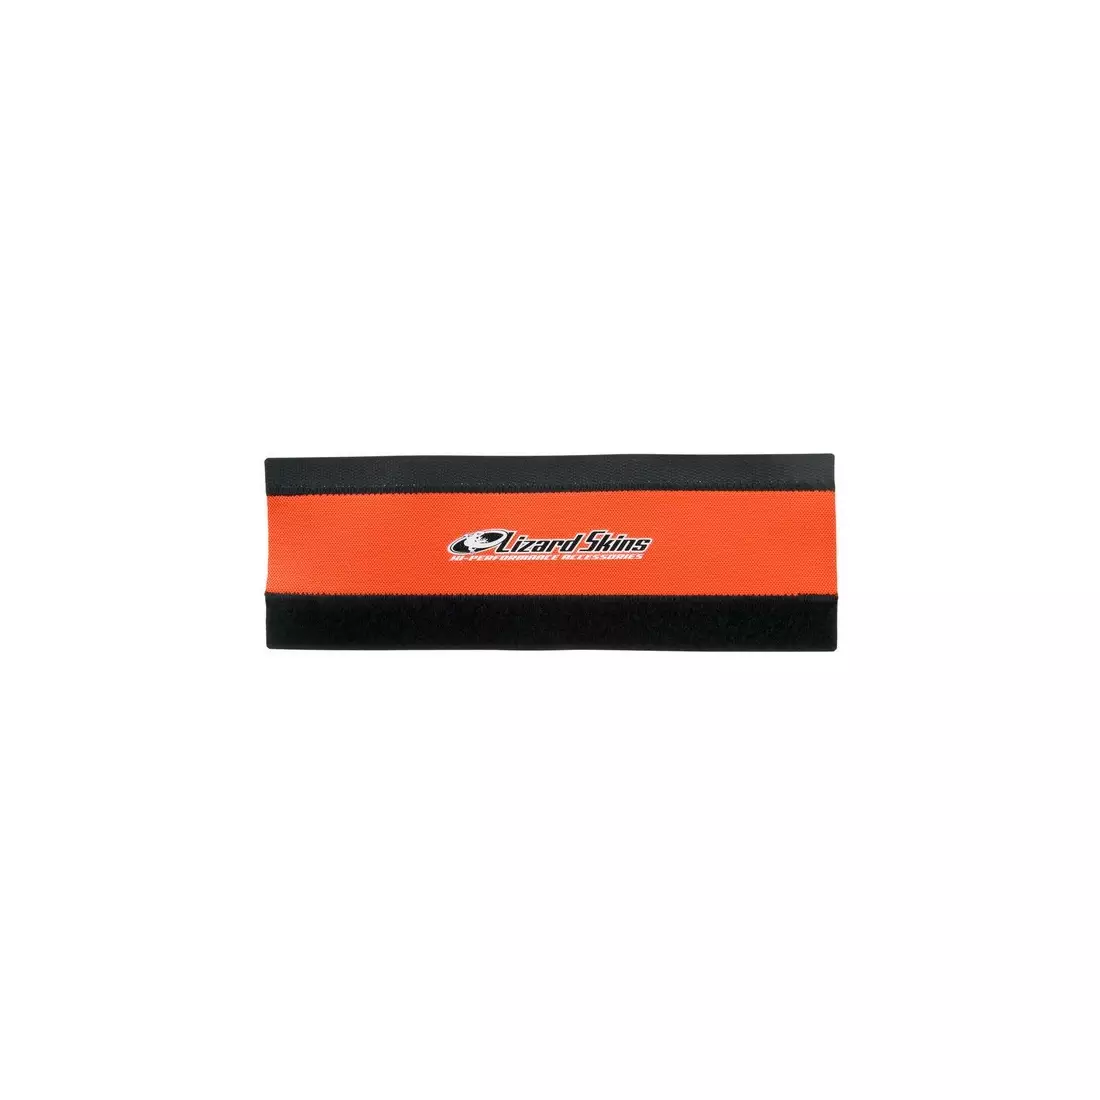 LIZARDSKINS kryt rámu kola jumbo (m) oranžový LZS-CHJDS900